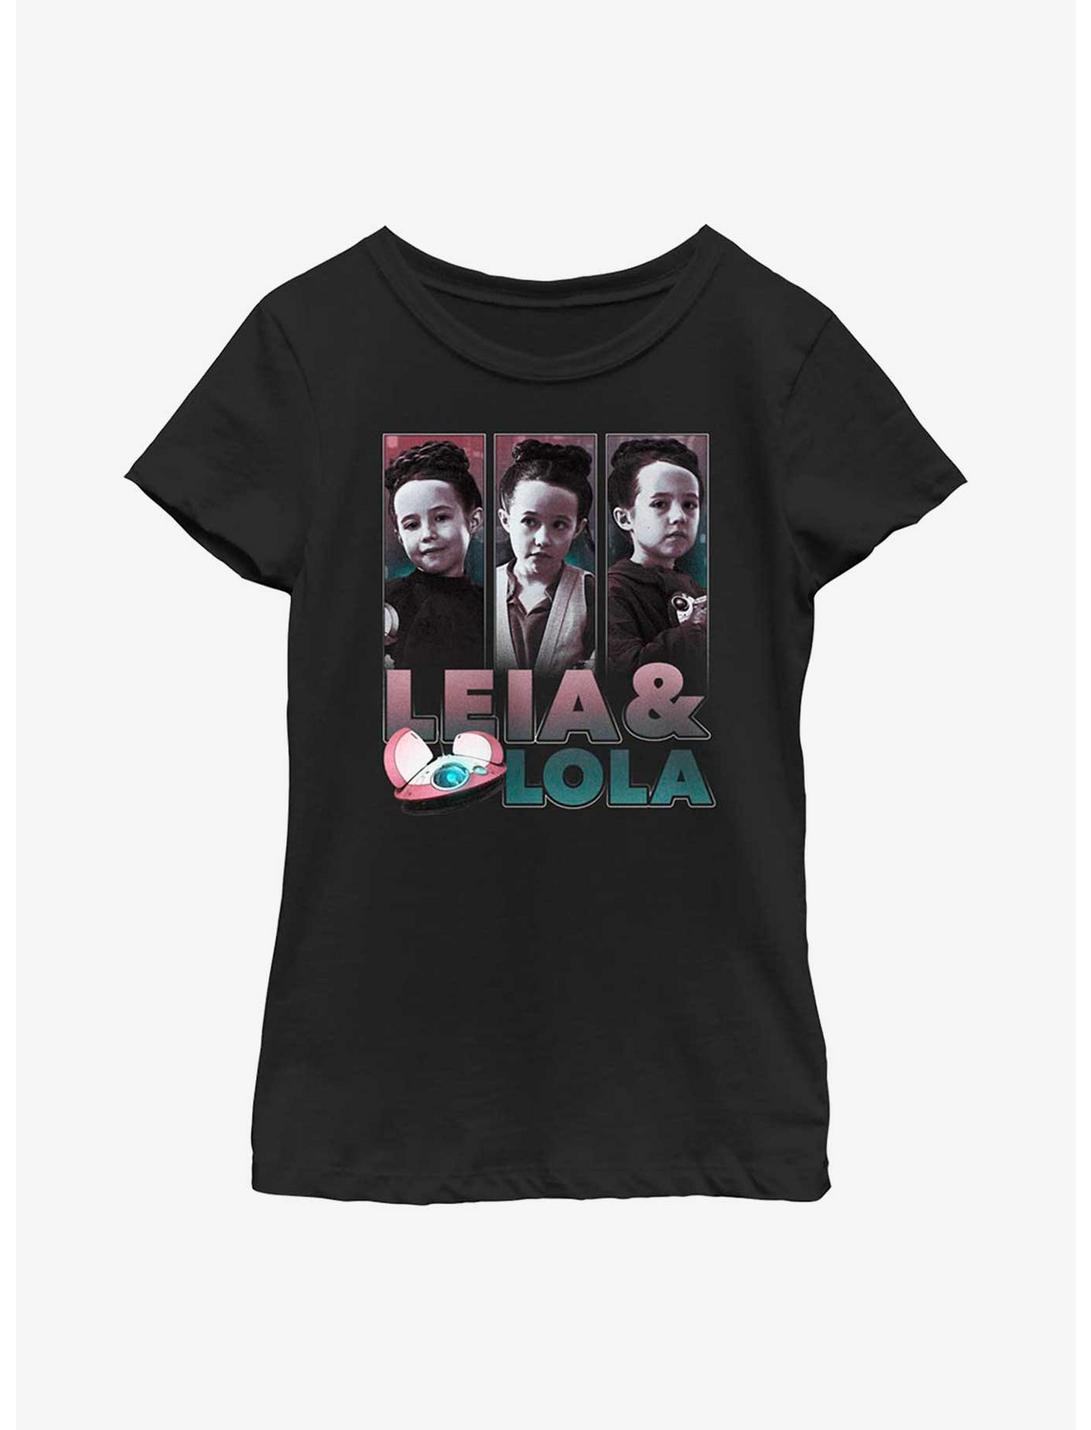 Star Wars Obi-Wan Kenobi Leia & Lola Panels Youth Girls T-Shirt, BLACK, hi-res